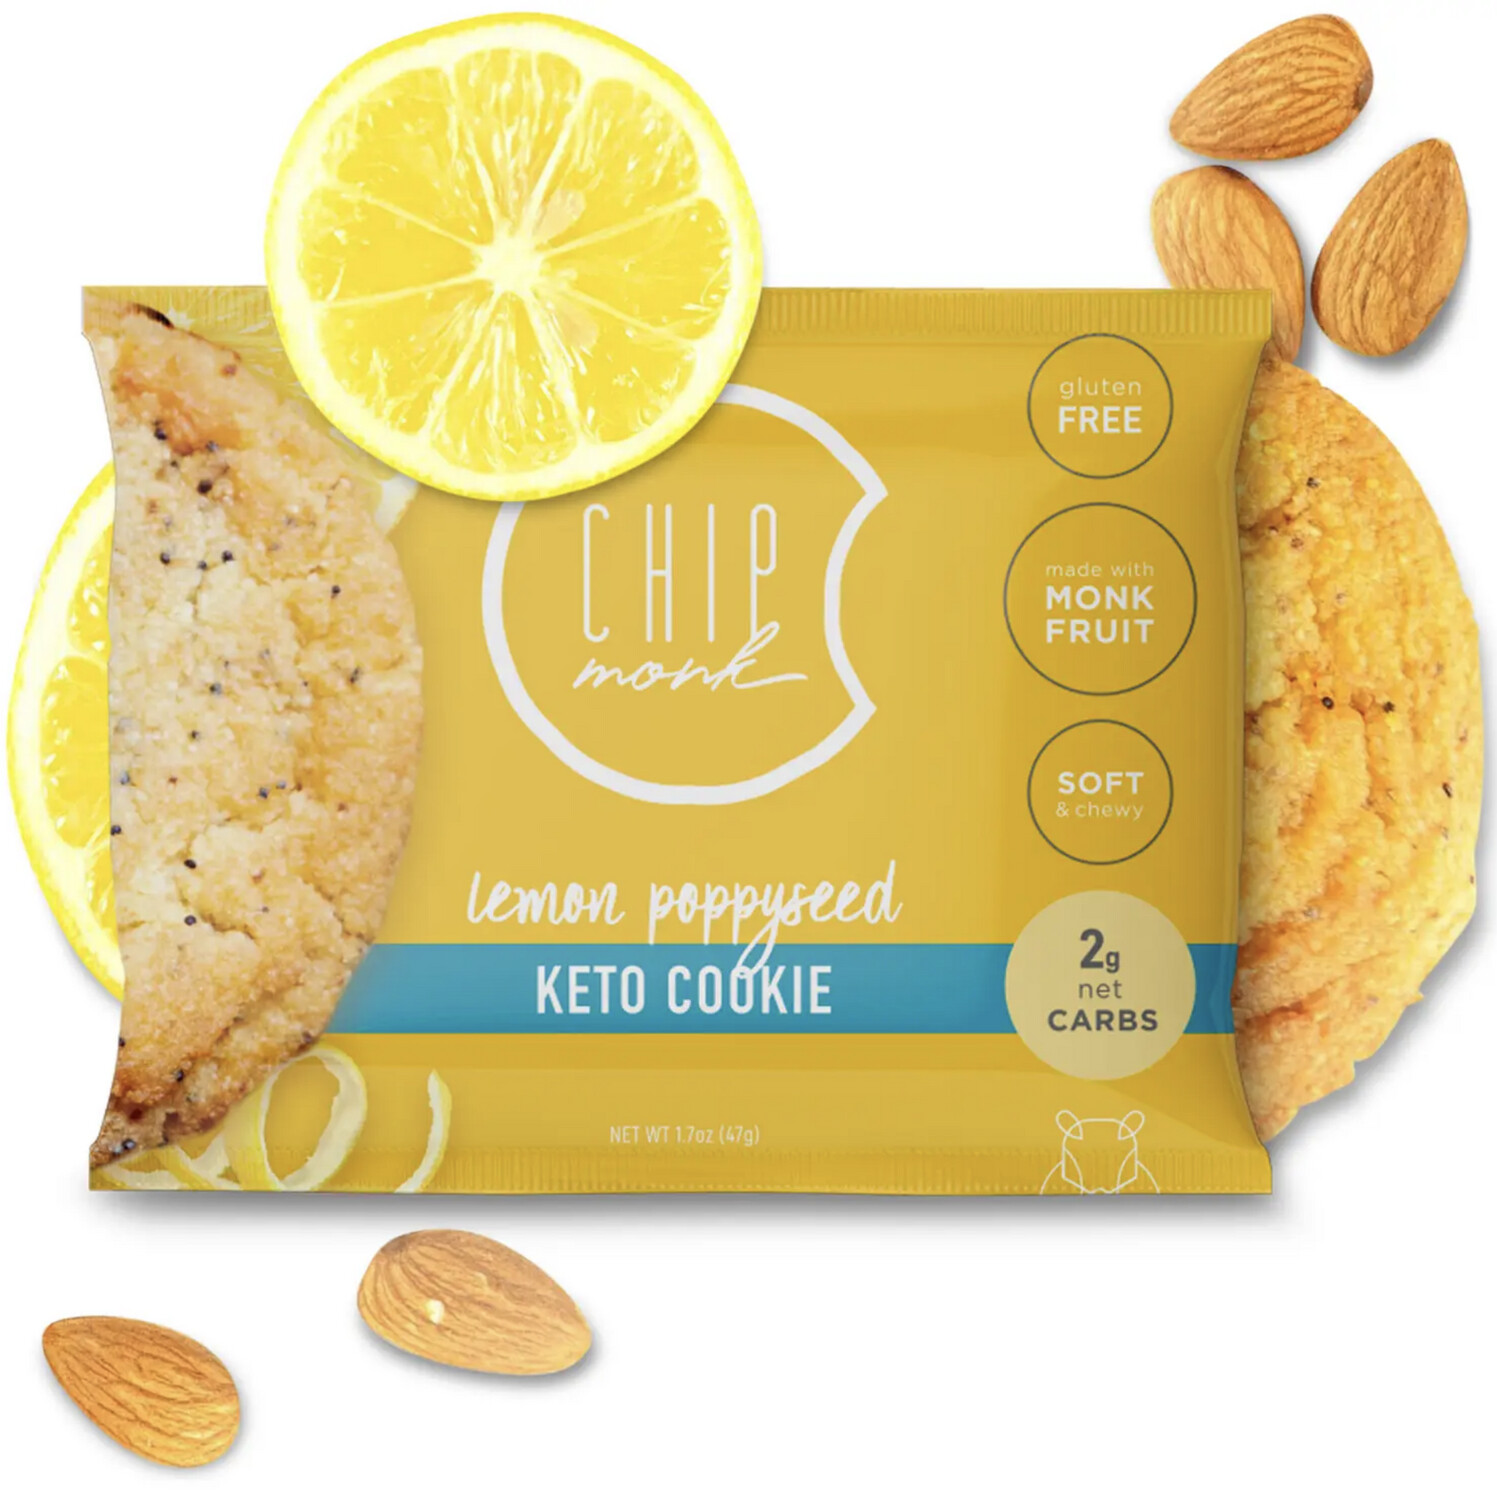 Whole Keto Cookie - ChipMonk - various flavors - 1 cookie